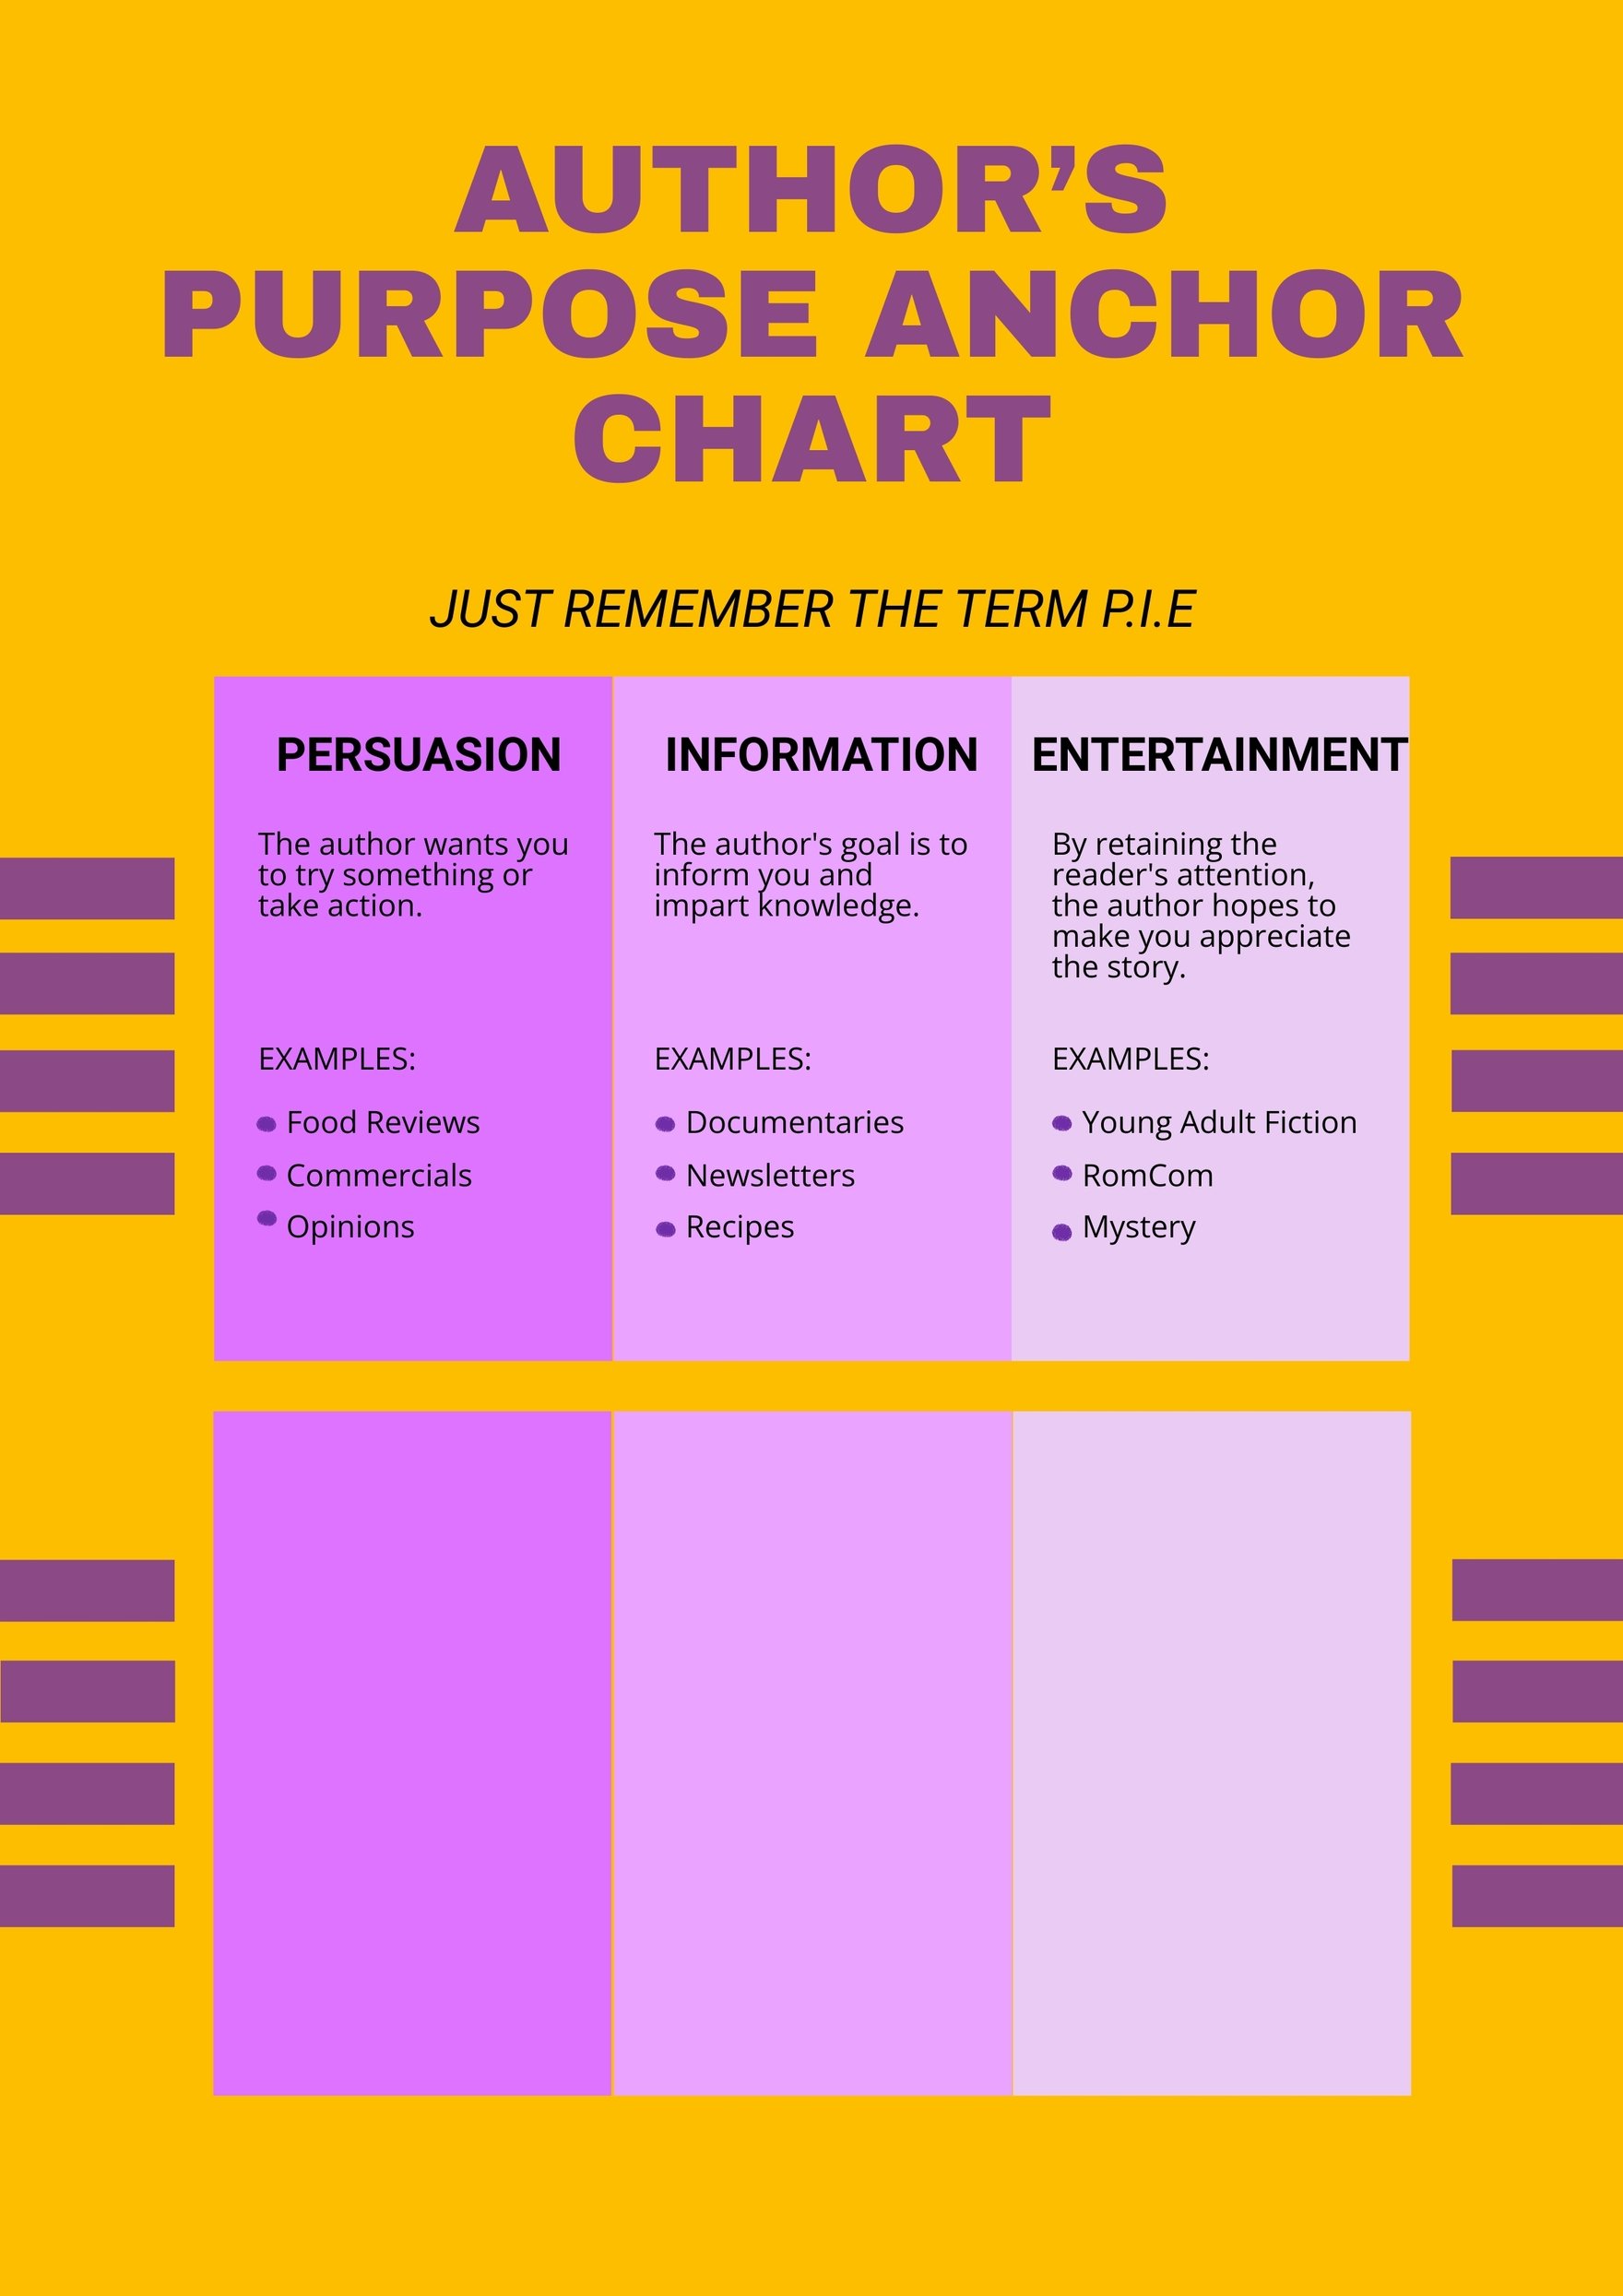 Author's Purpose anchor chart in PDF, Illustrator